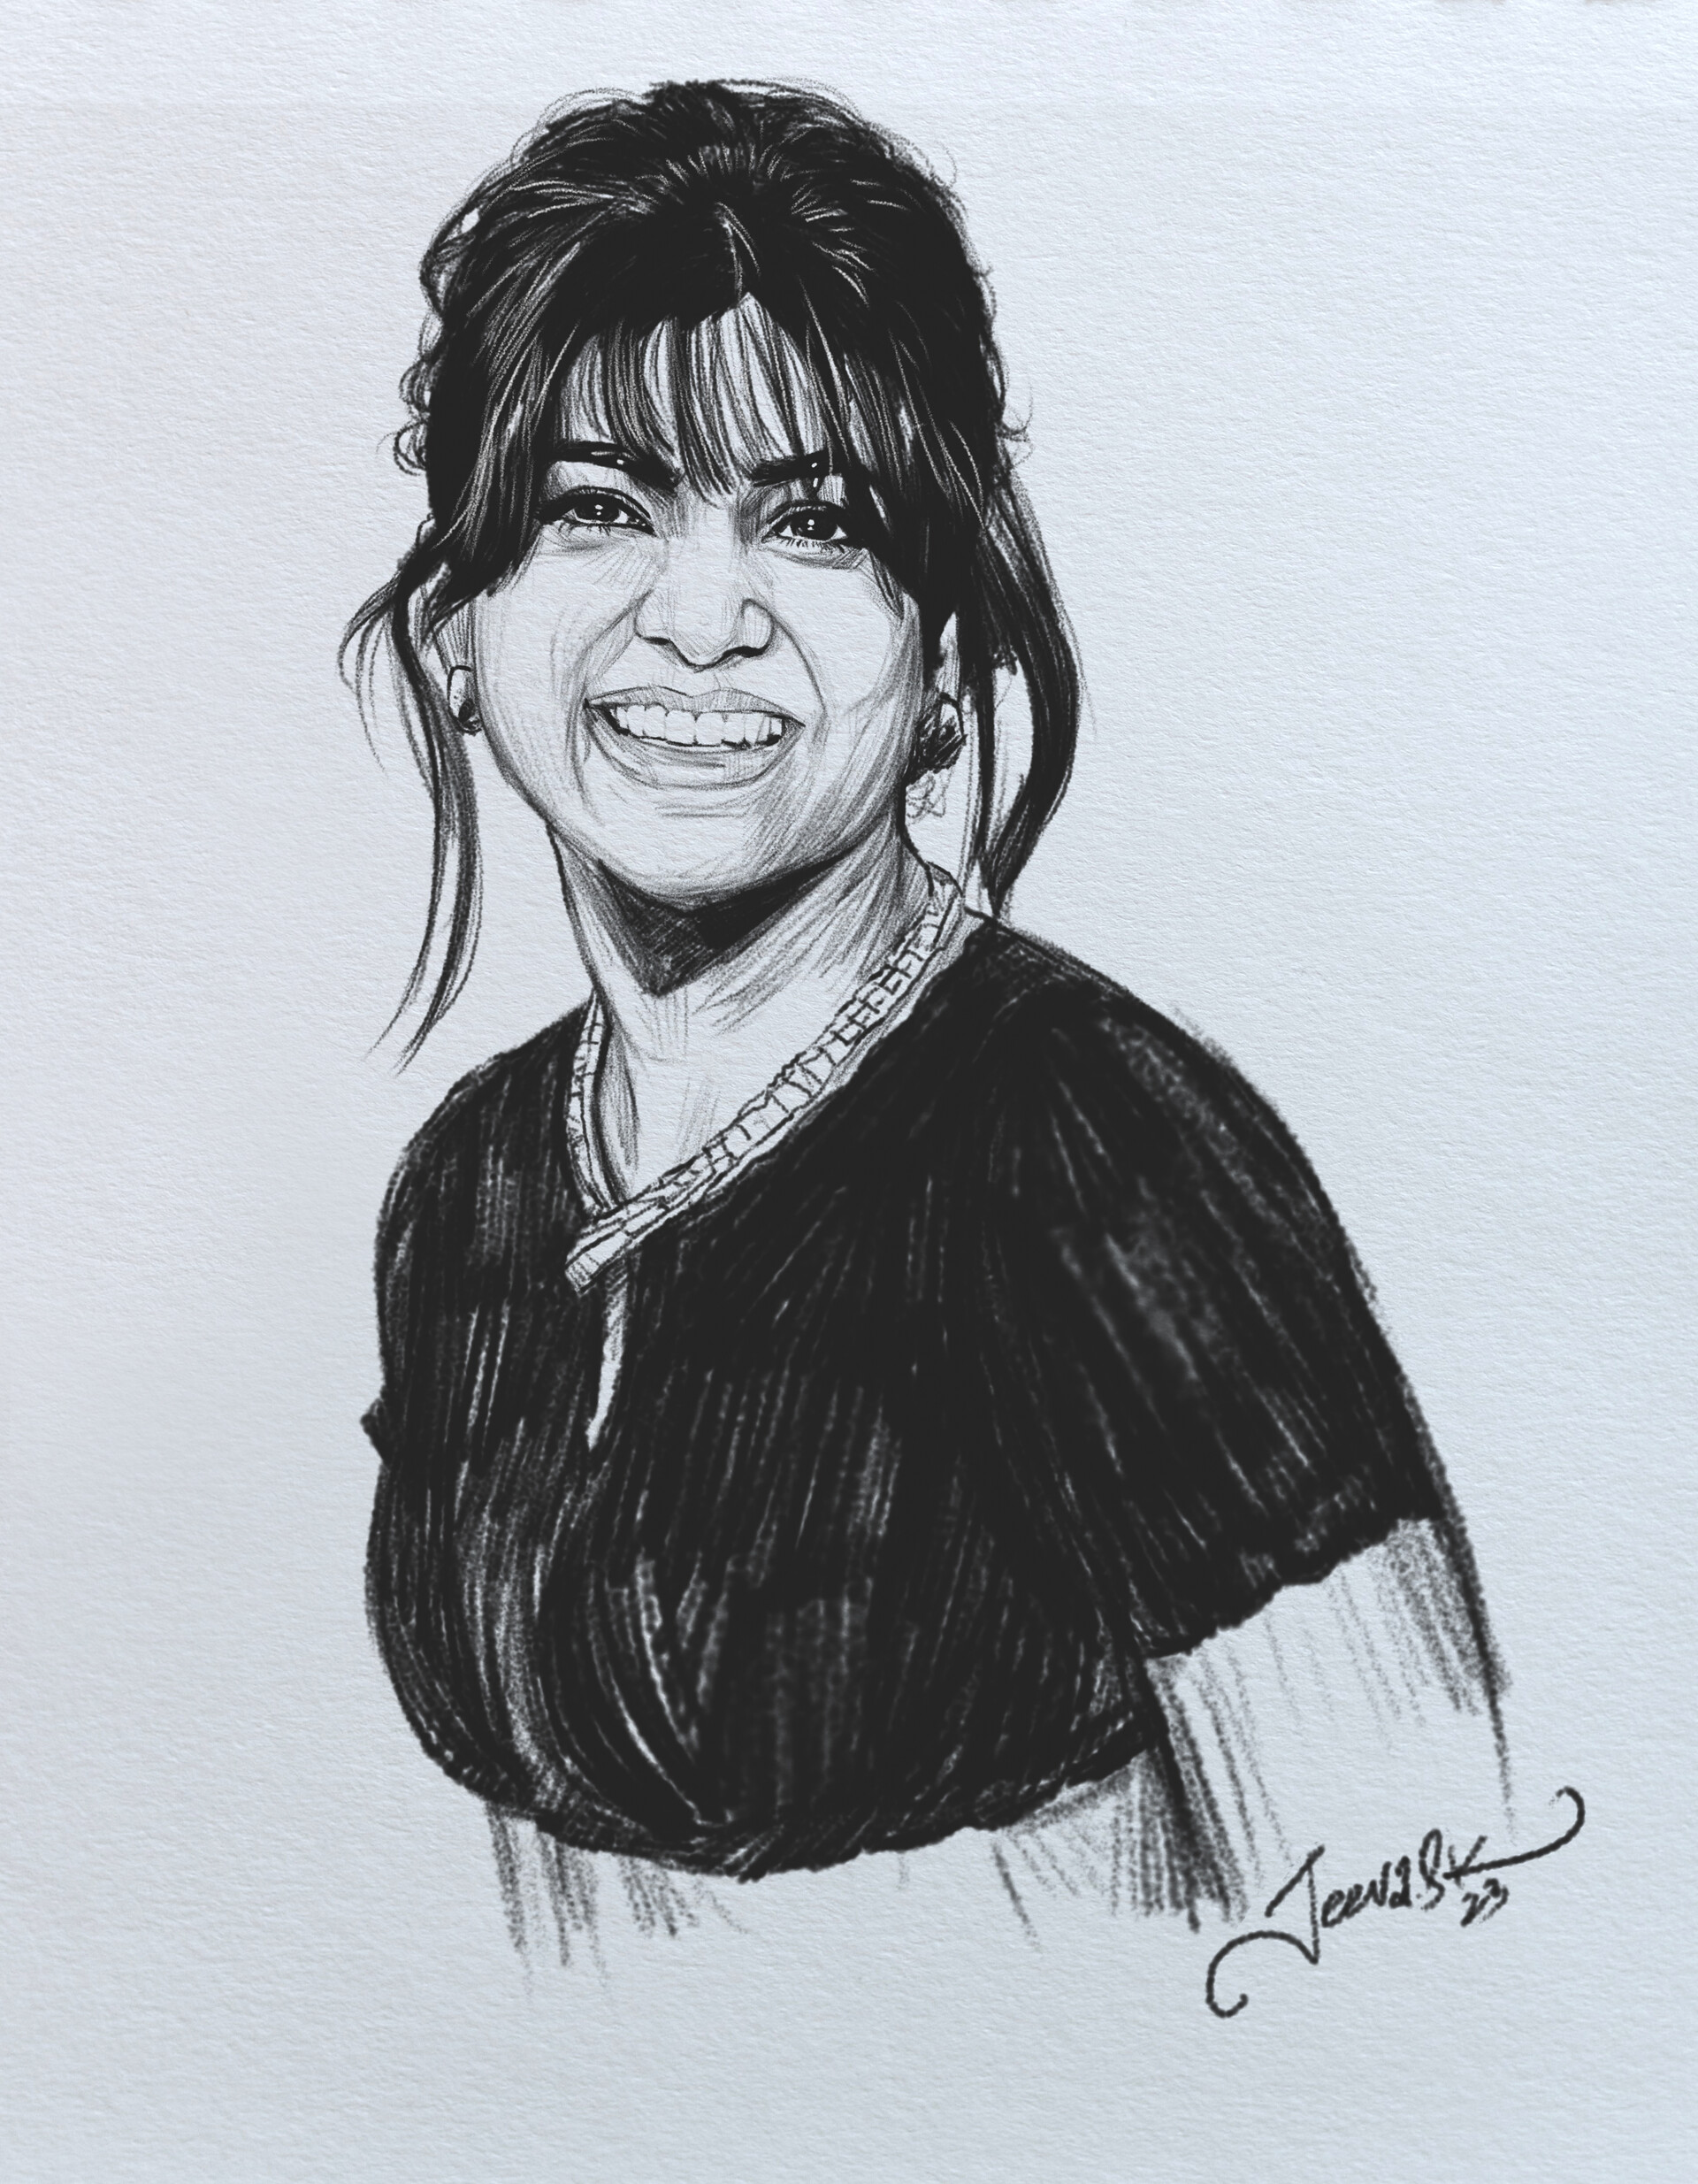 A tiny portrait of Samantha Ravndahl / my first post on Reddit! : r/drawing